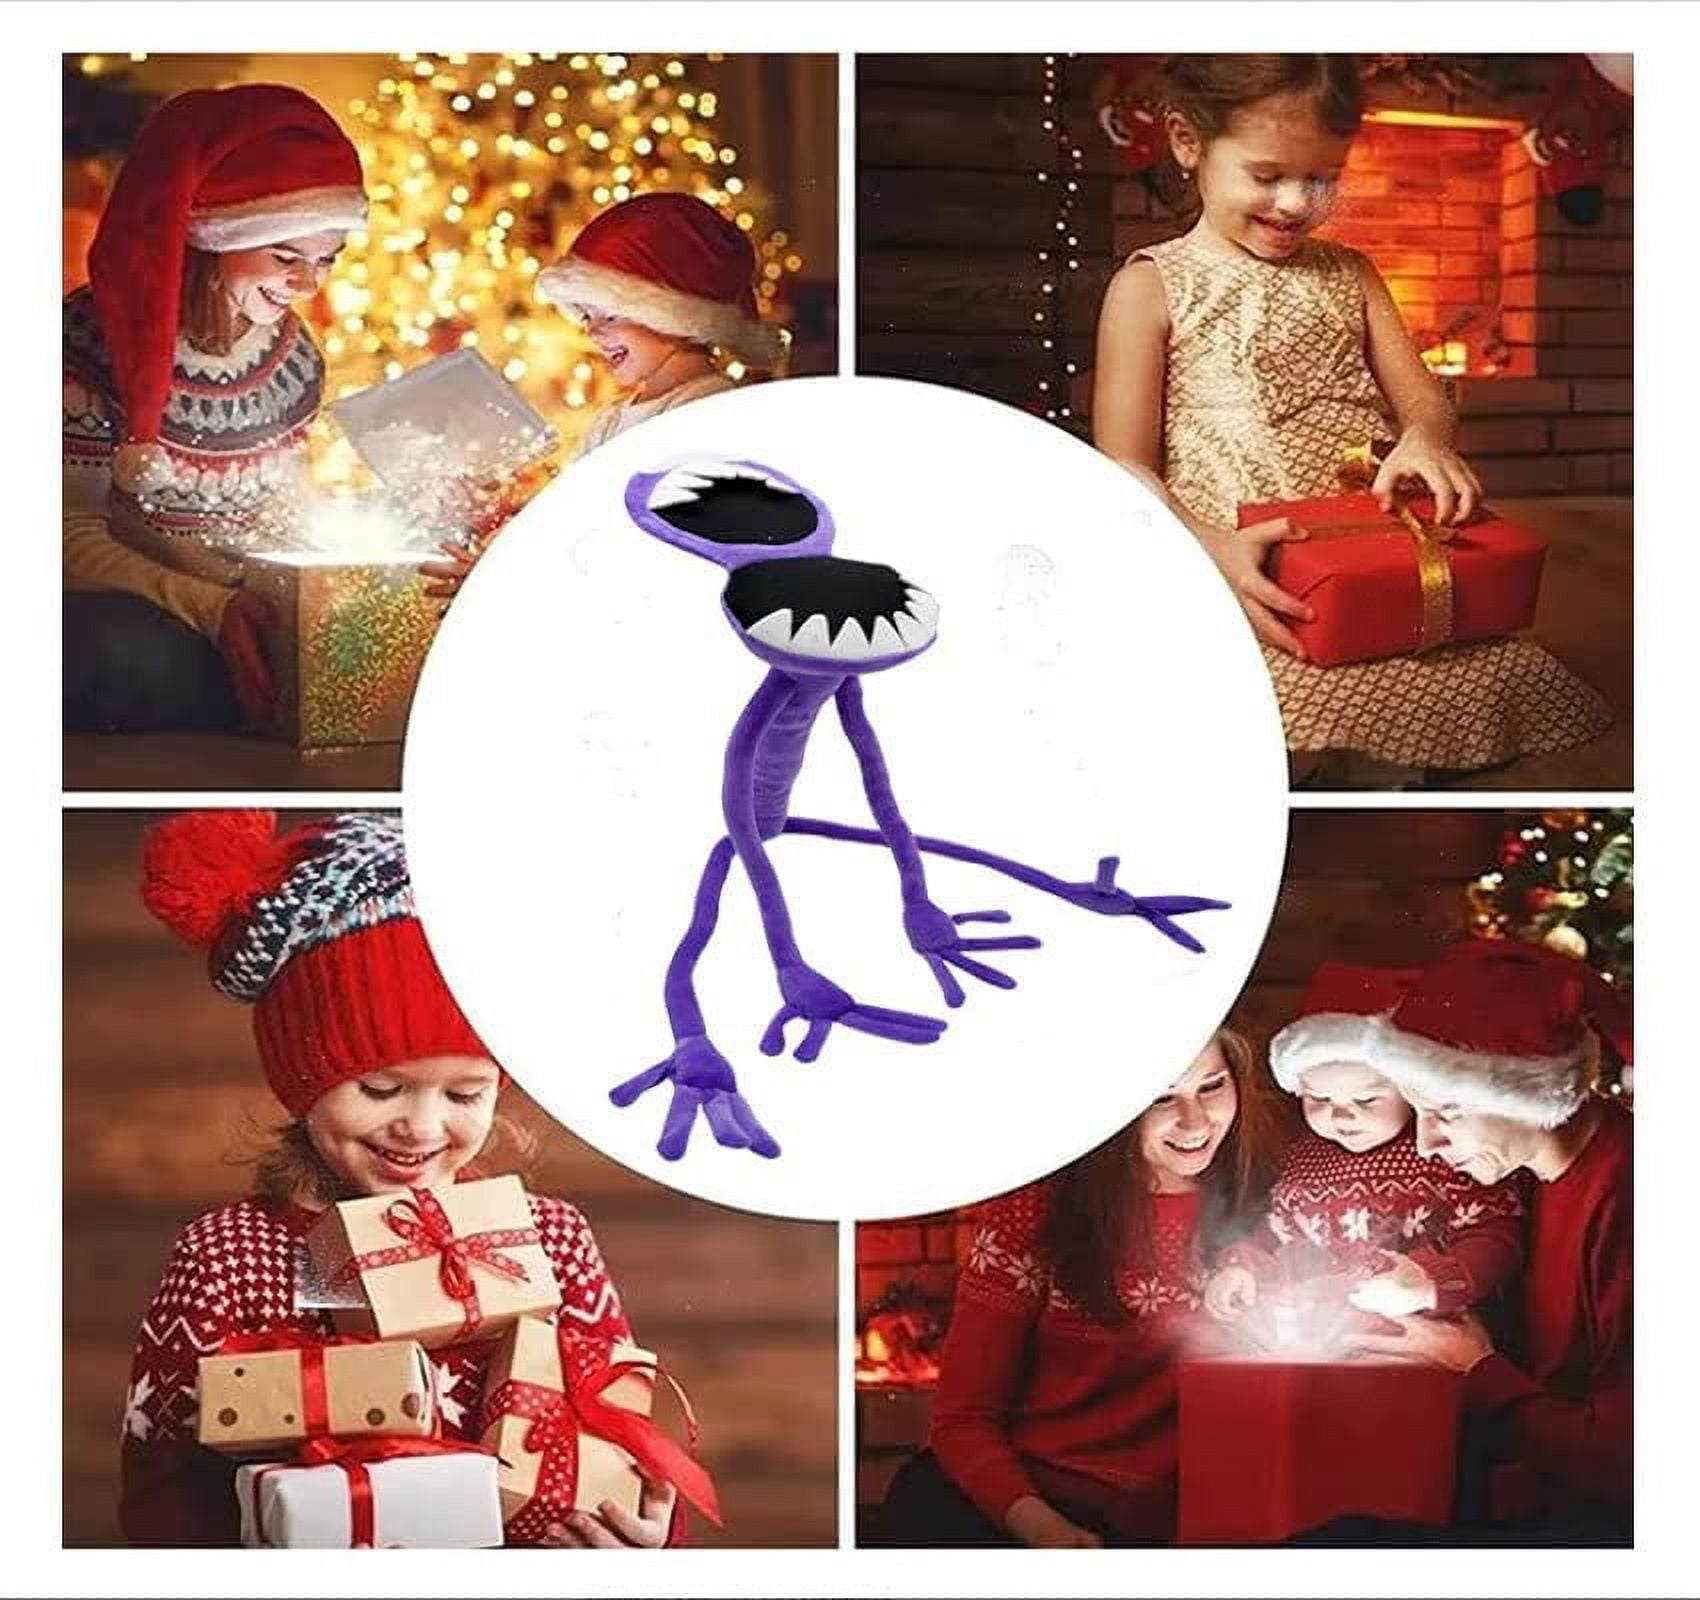 Purple Rainbow Friends Monsters Figure Plush Game Stuffed Toy Gift  Christmas Kid